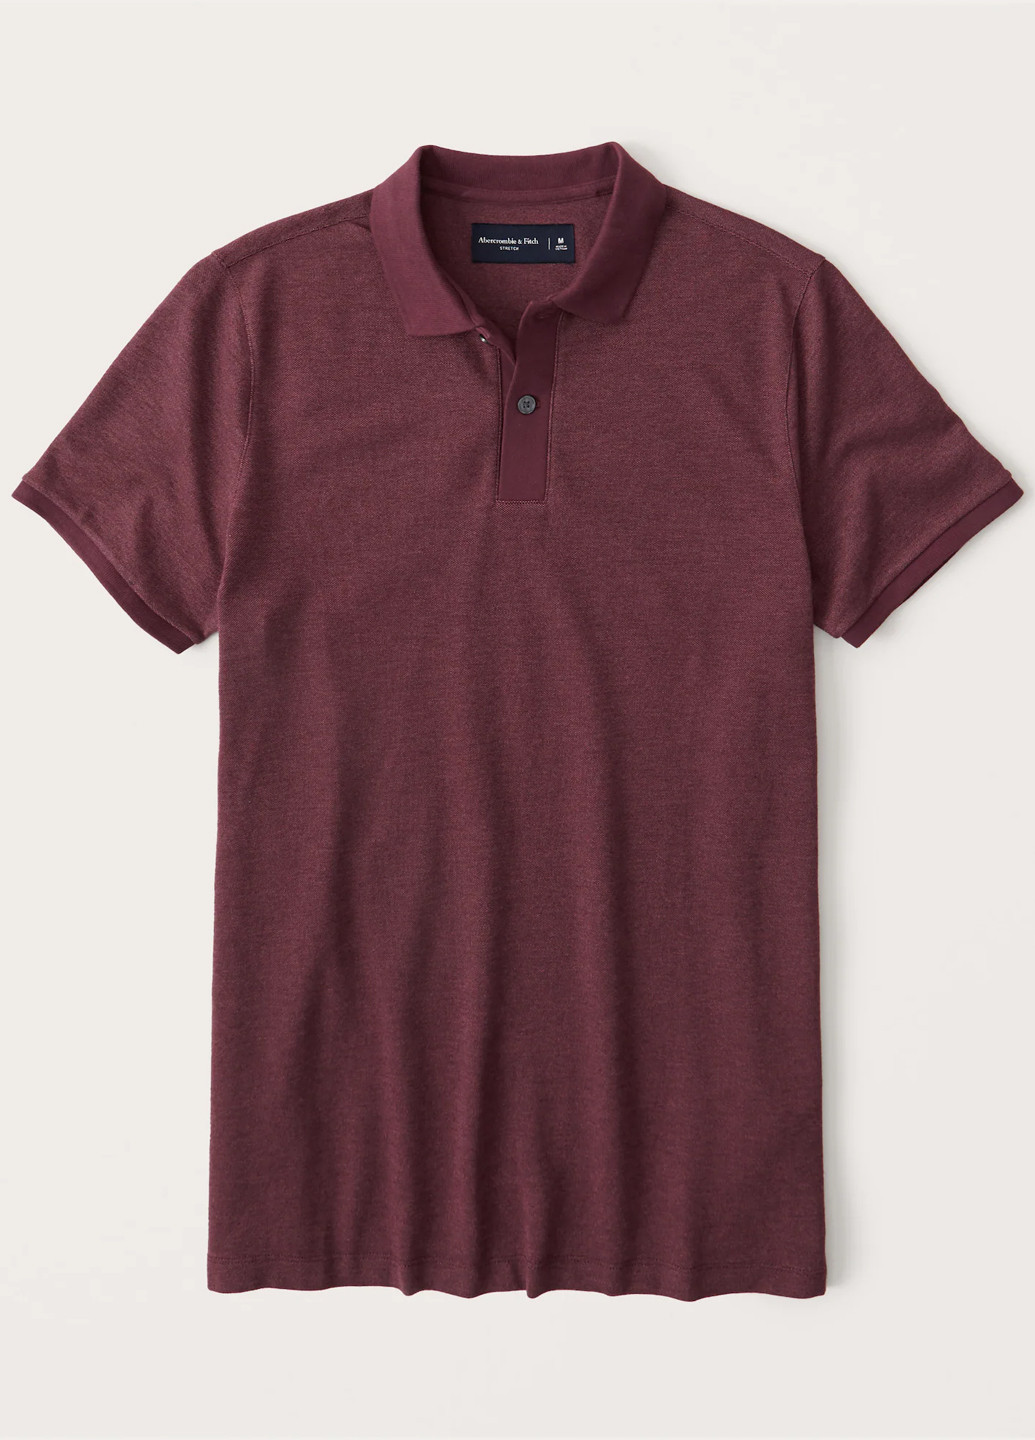 Бордовая футболка-поло для мужчин Abercrombie & Fitch однотонная